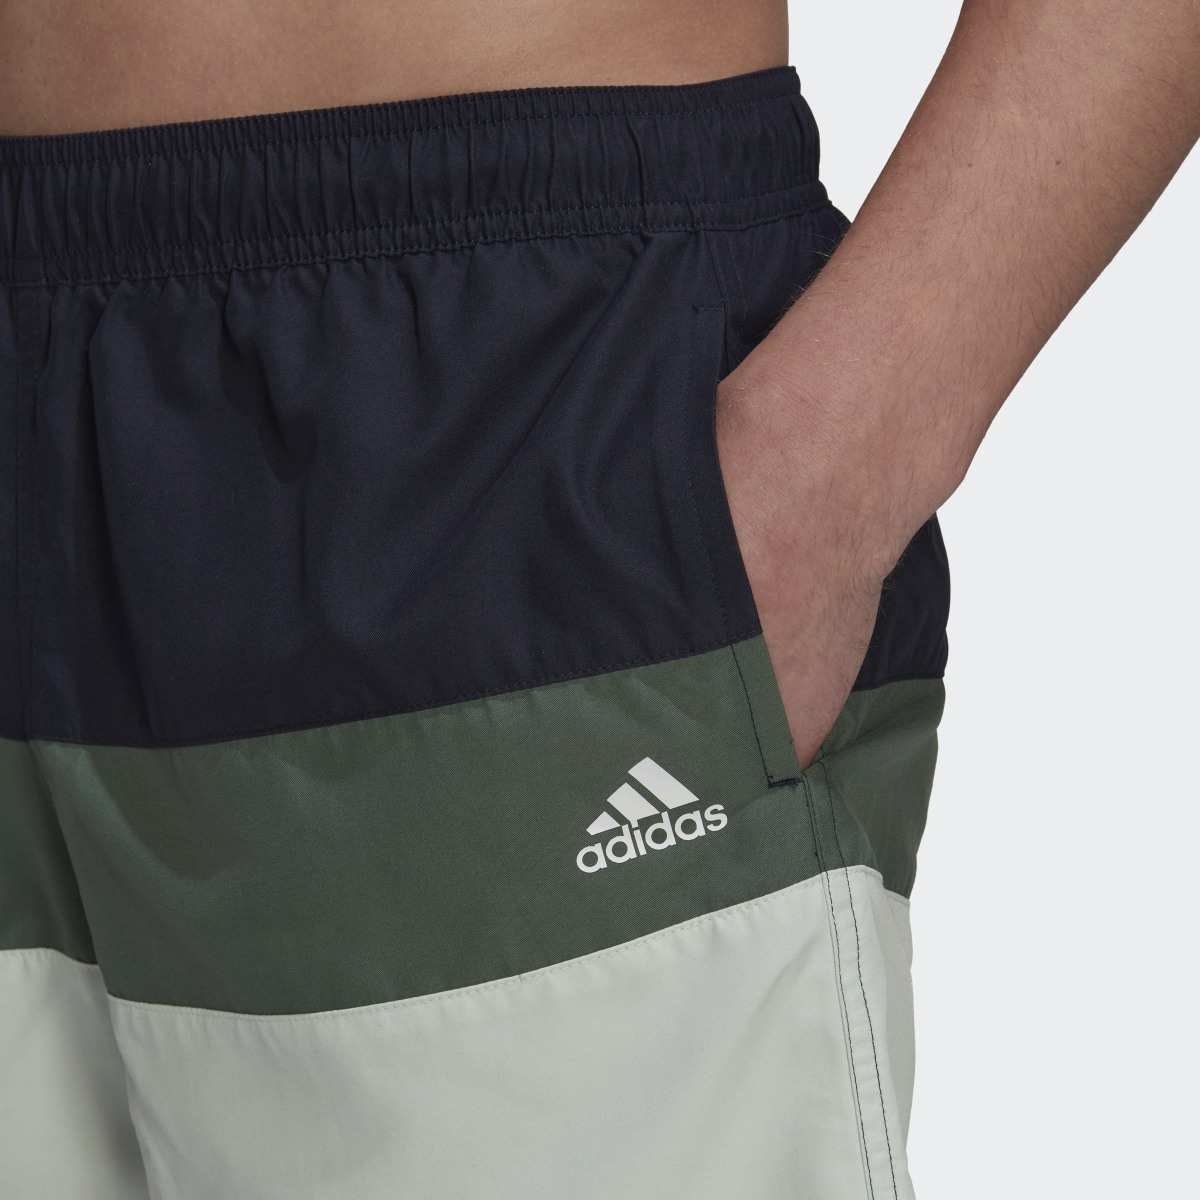 Adidas Short-Length Colorblock Swim Shorts. 5